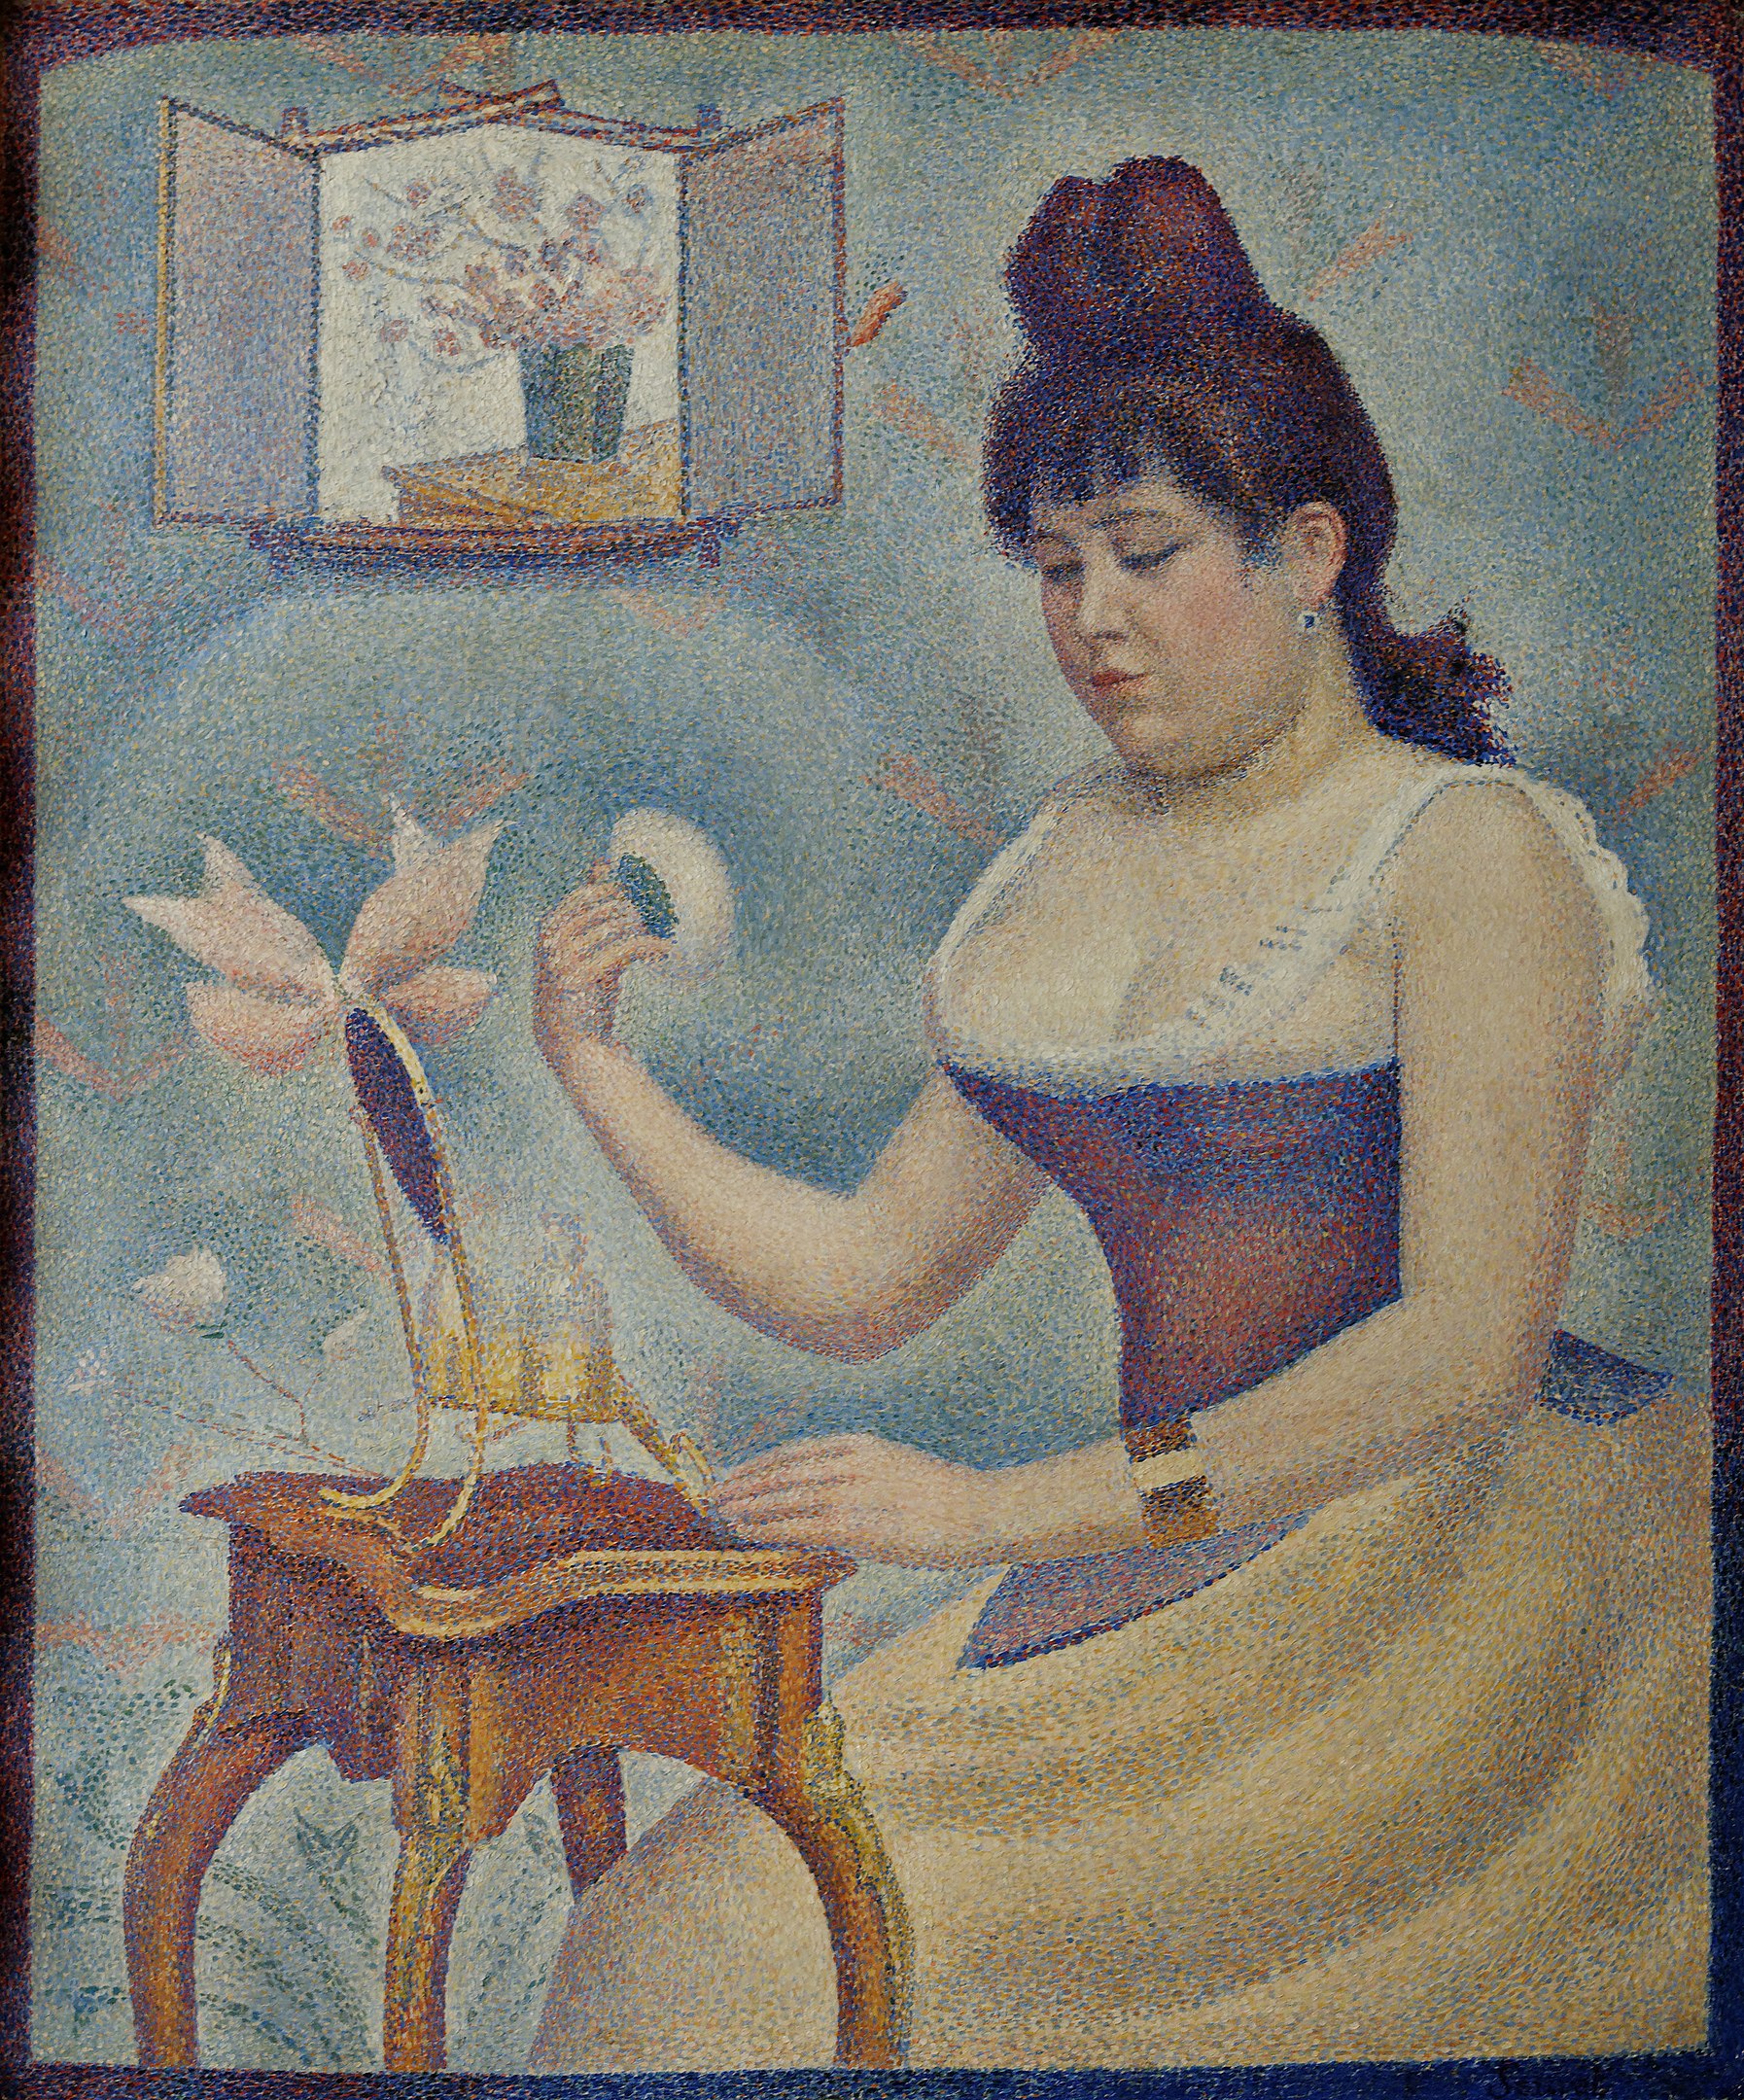 Пудрящаяся женщина (Young Woman Powdering Herself) by Georges Seurat - 1889-90 - 95.5 x 79.5 см 